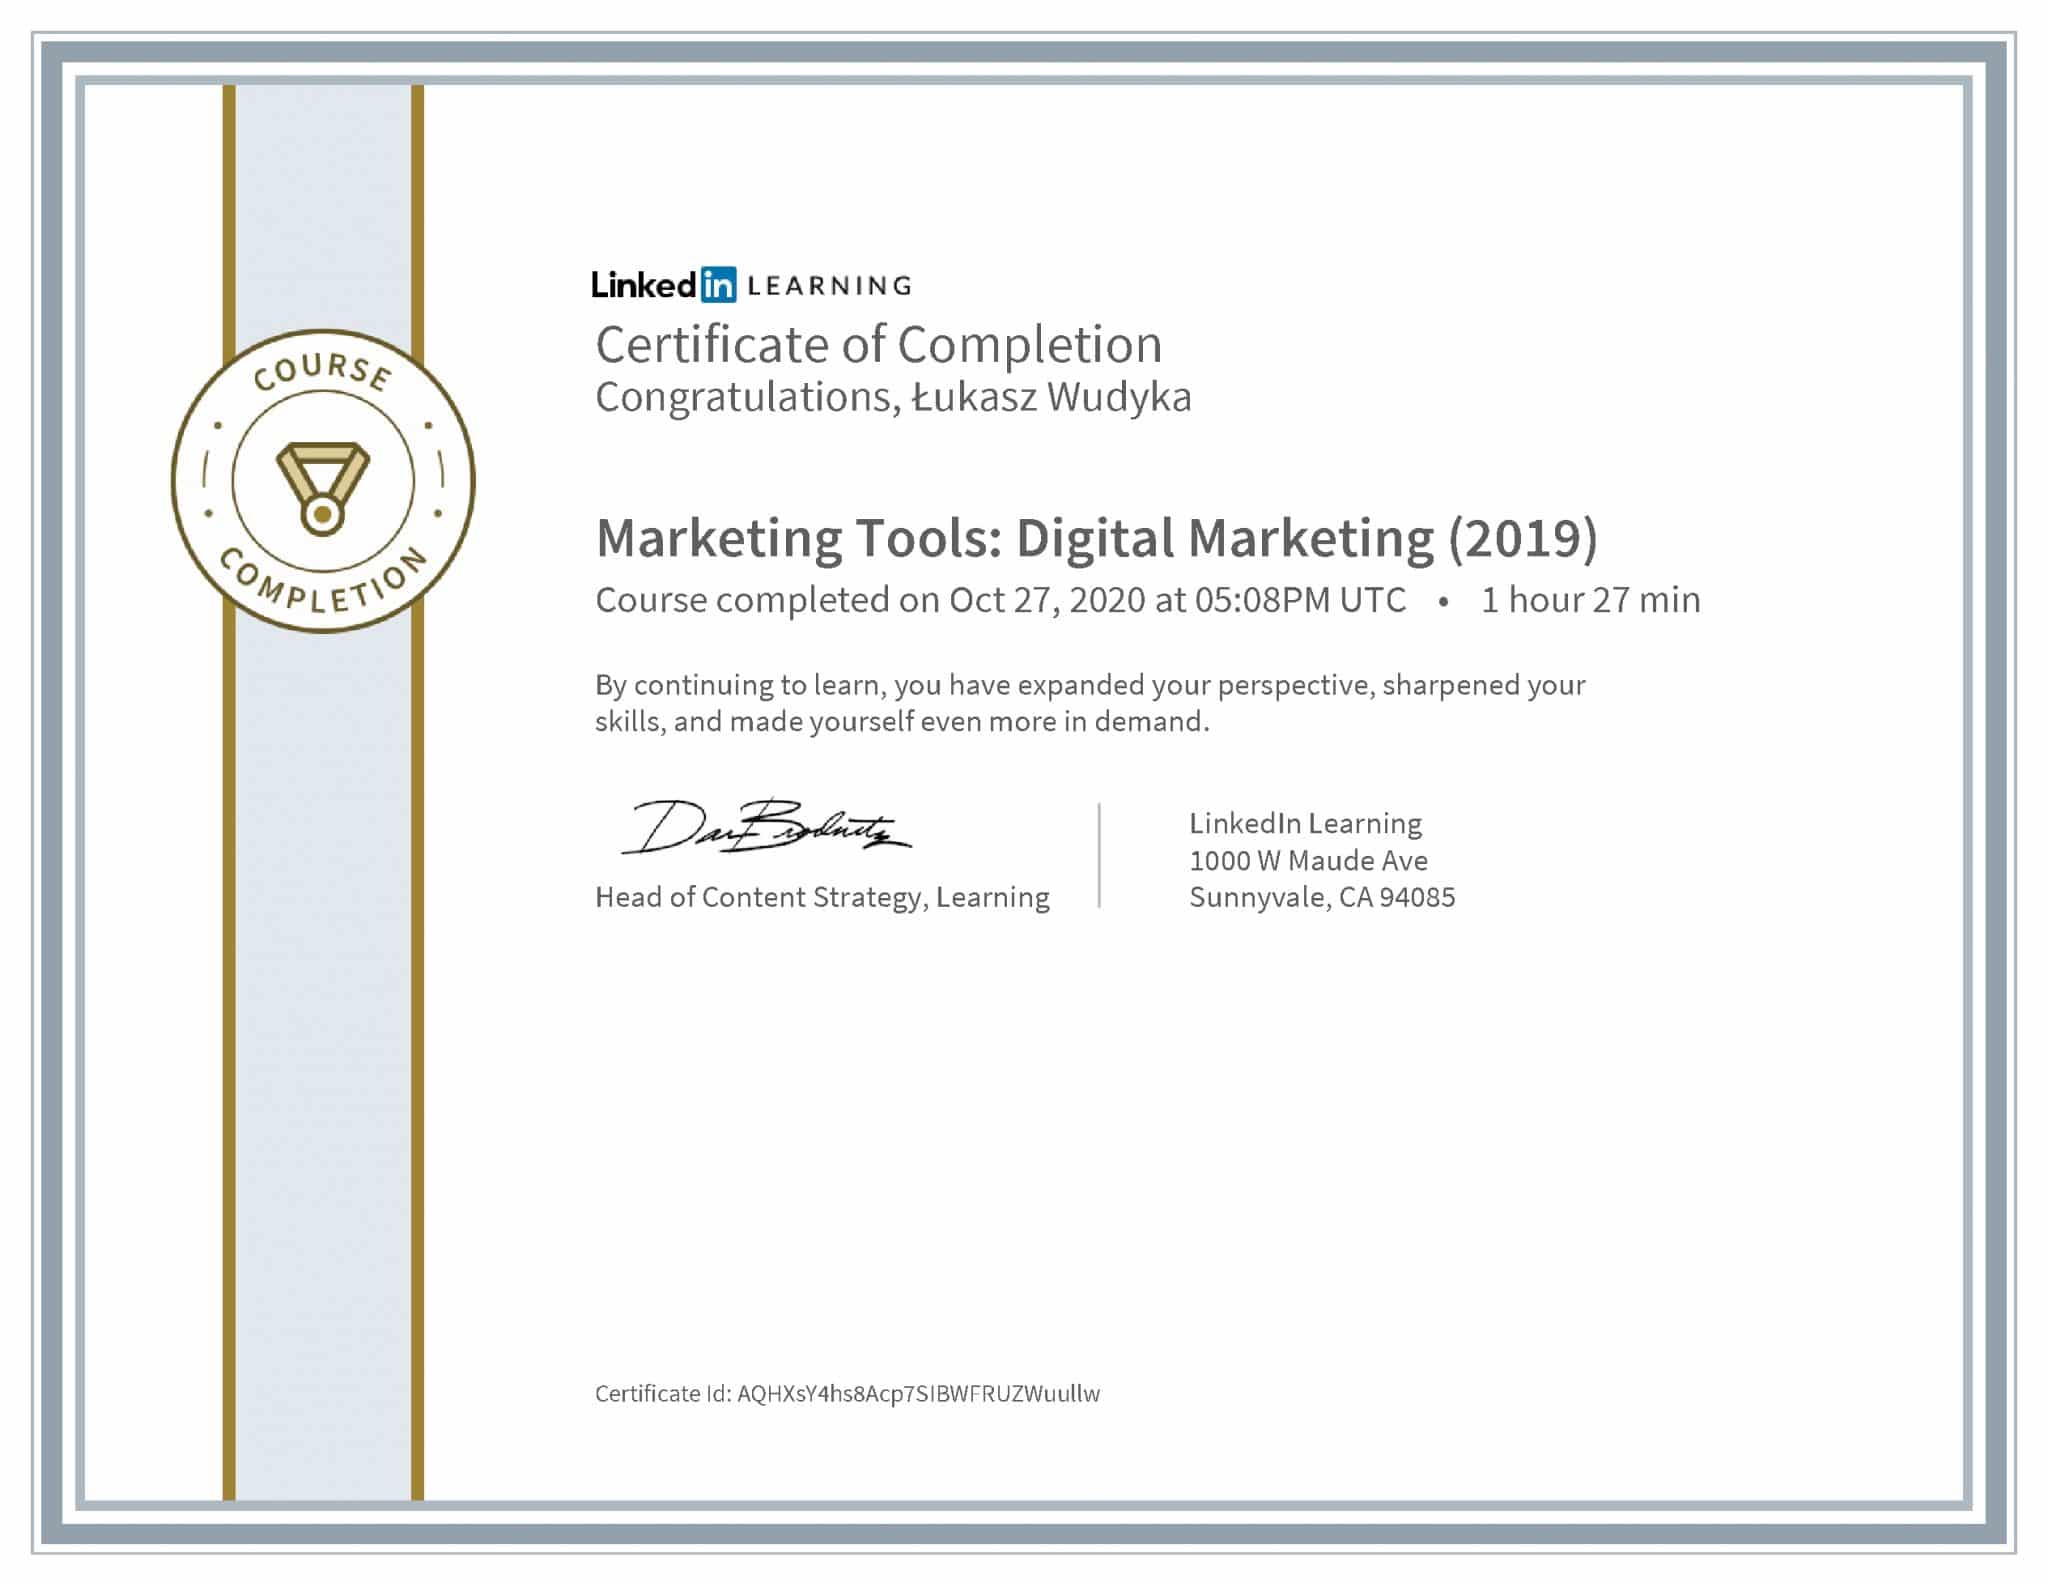 Łukasz Wudyka certyfikat LinkedIn Marketing Tools: Digital Marketing (2019)